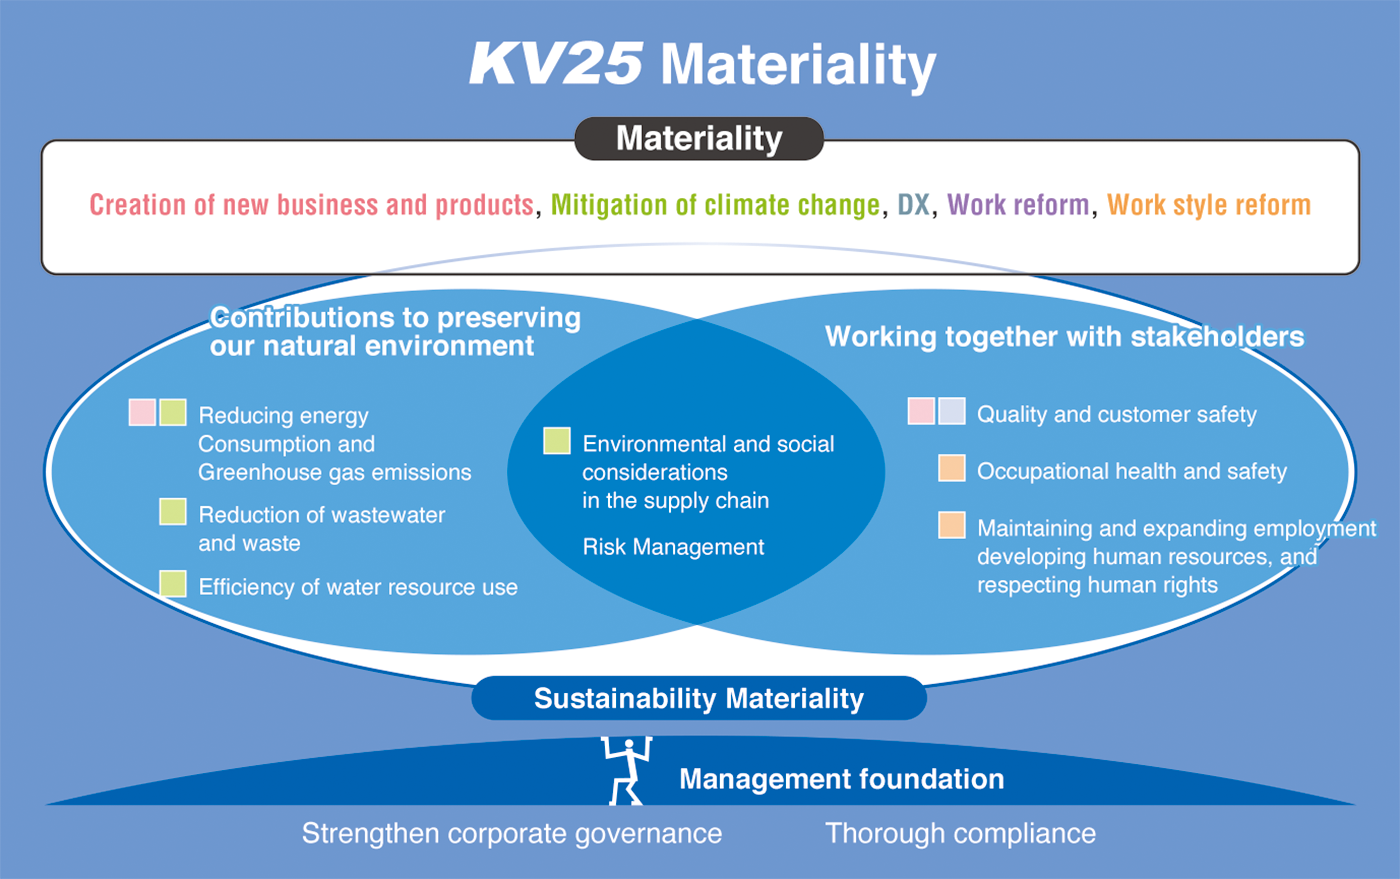 KV25 materiality